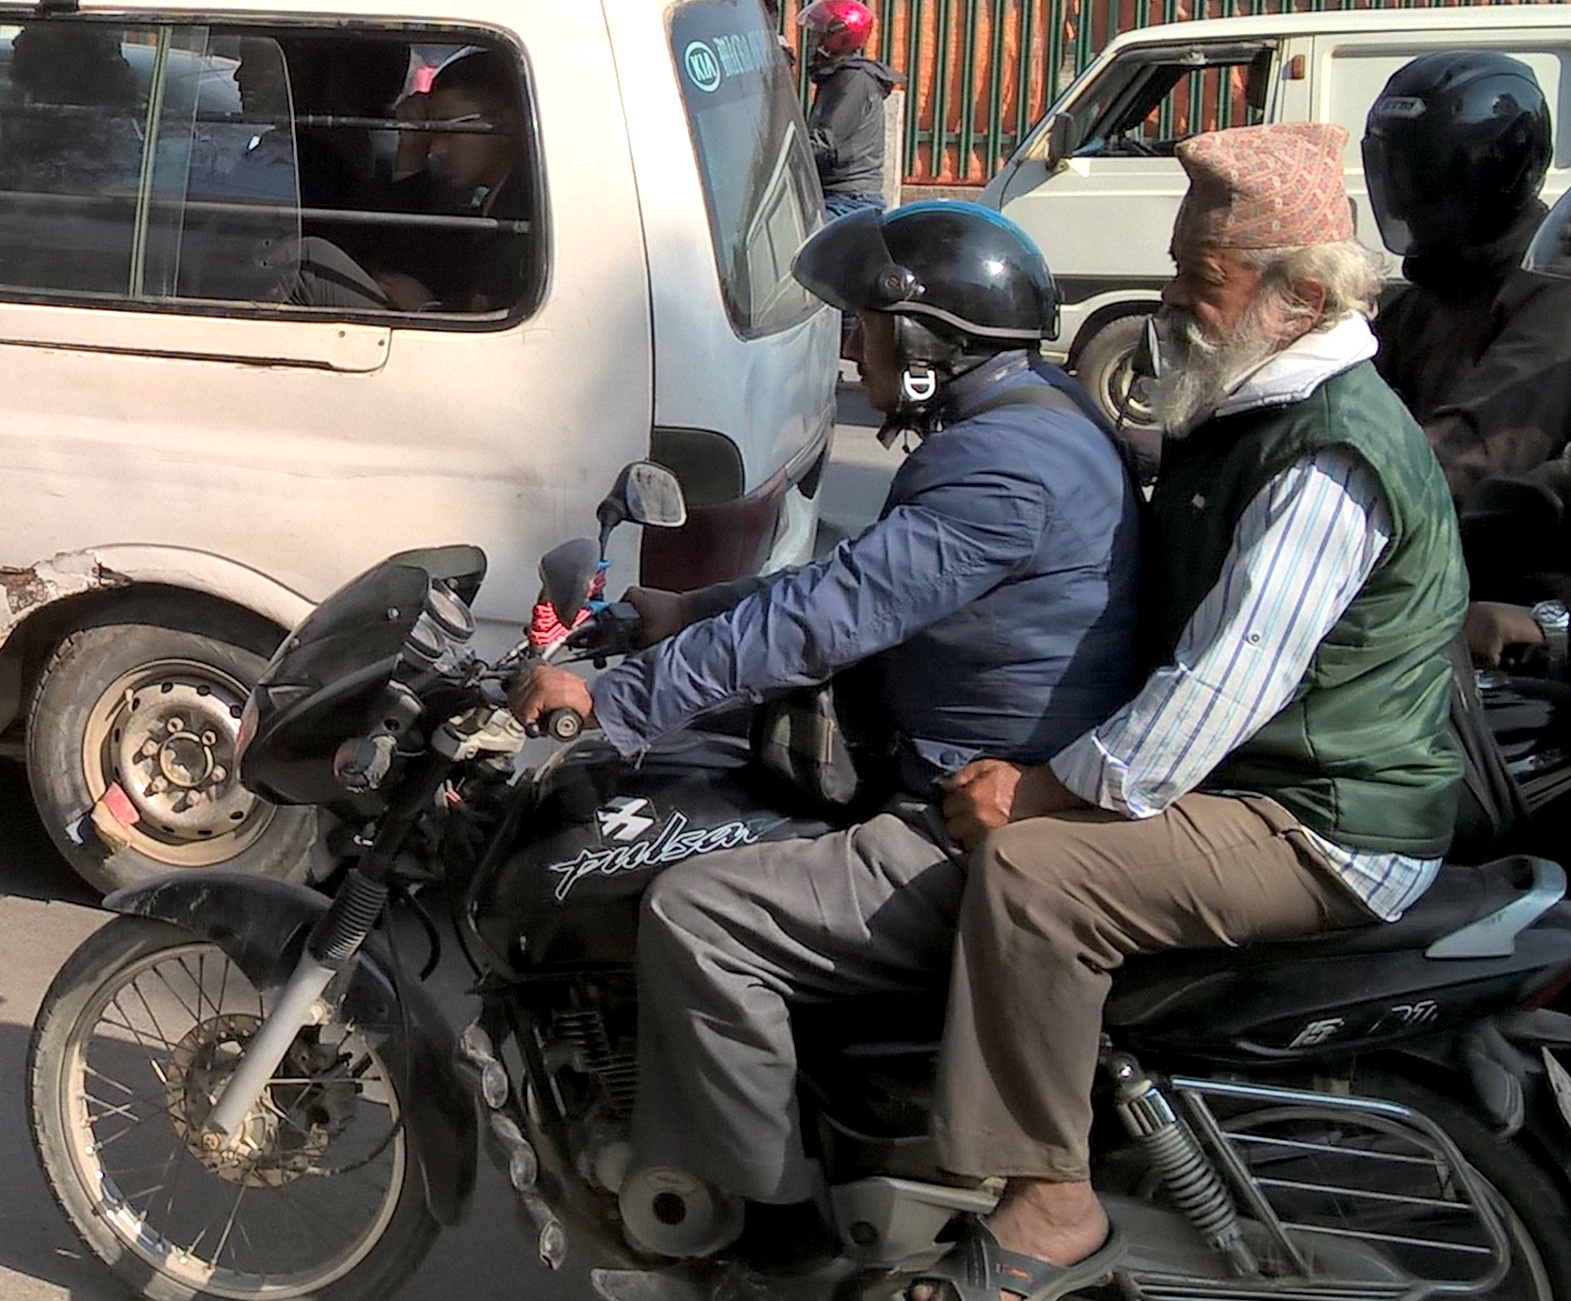 Katmandù-it's always rush hour...